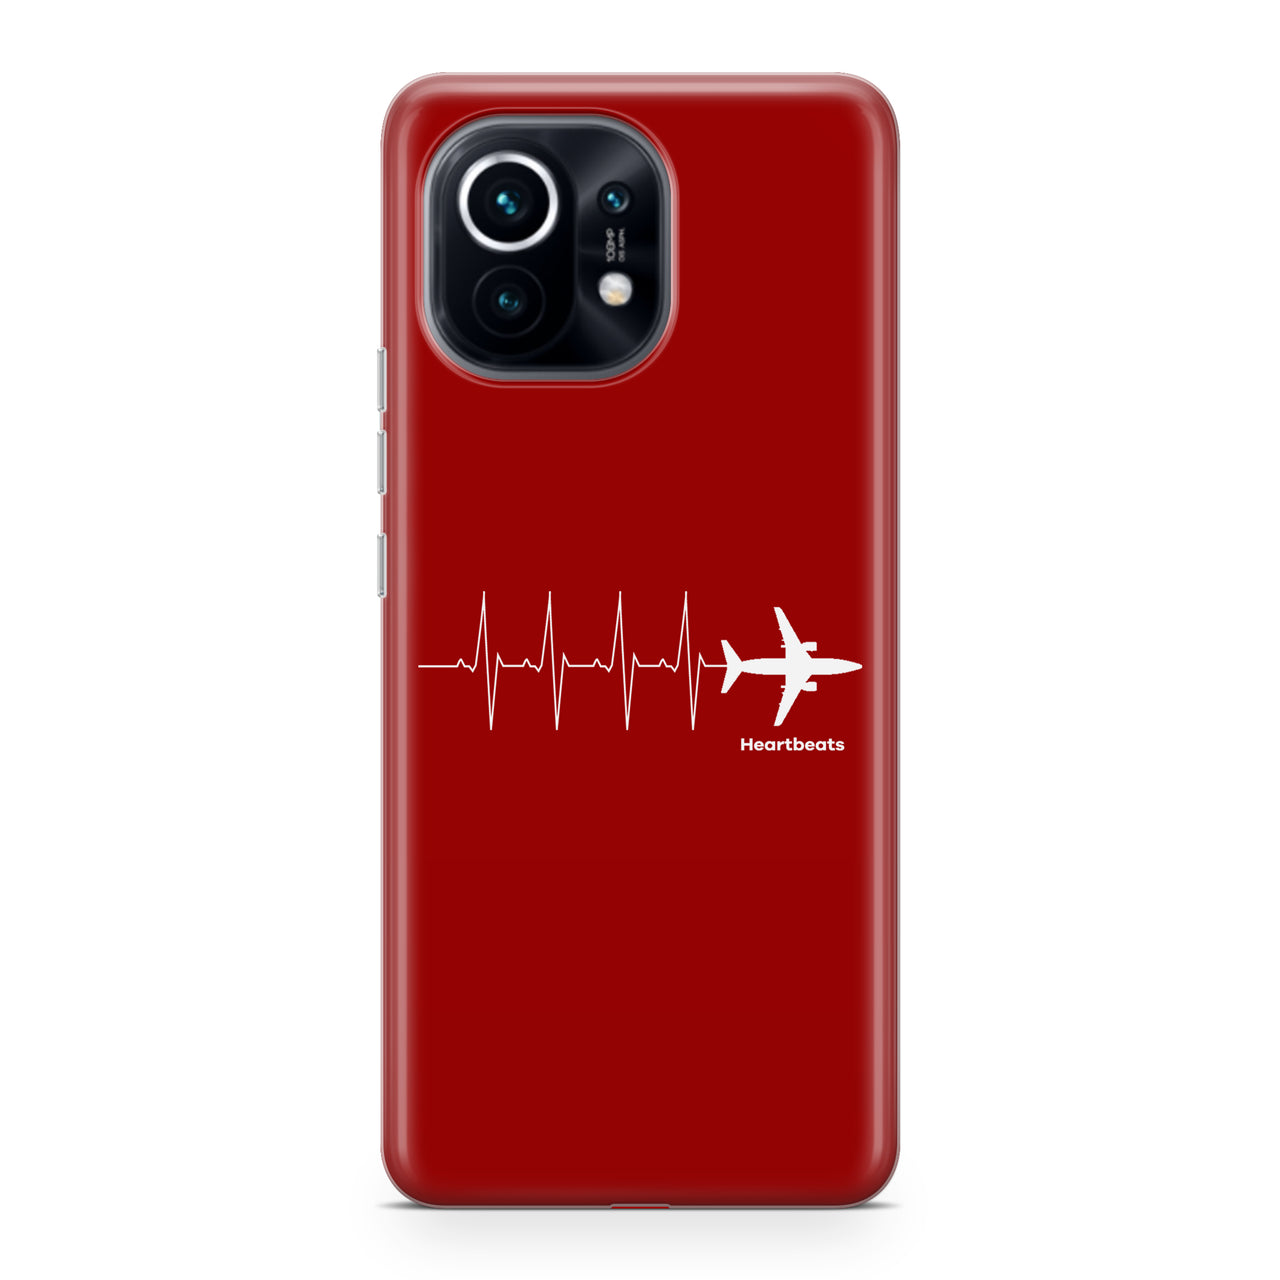 Aviation Heartbeats Designed Xiaomi Cases